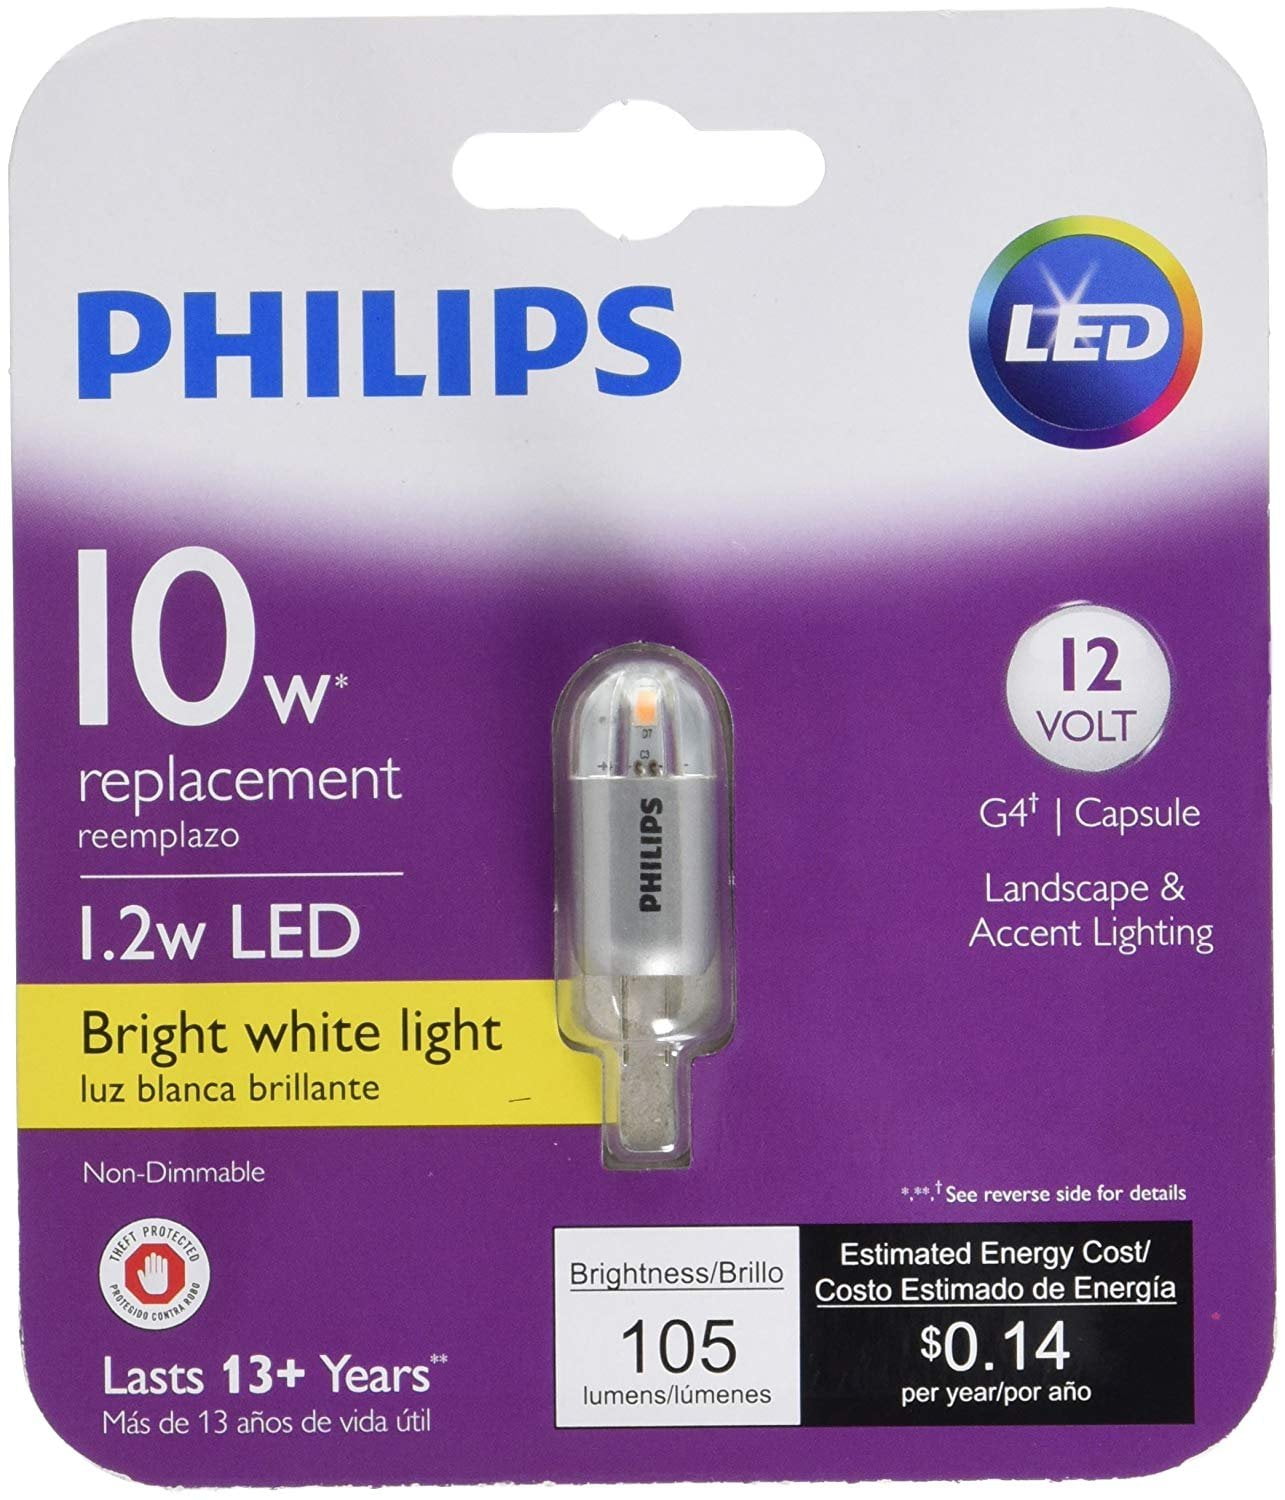 Op grote schaal De volgende item Philips 458497 10W Equivalent LED 12V Capsule Light Bulb - Walmart.com